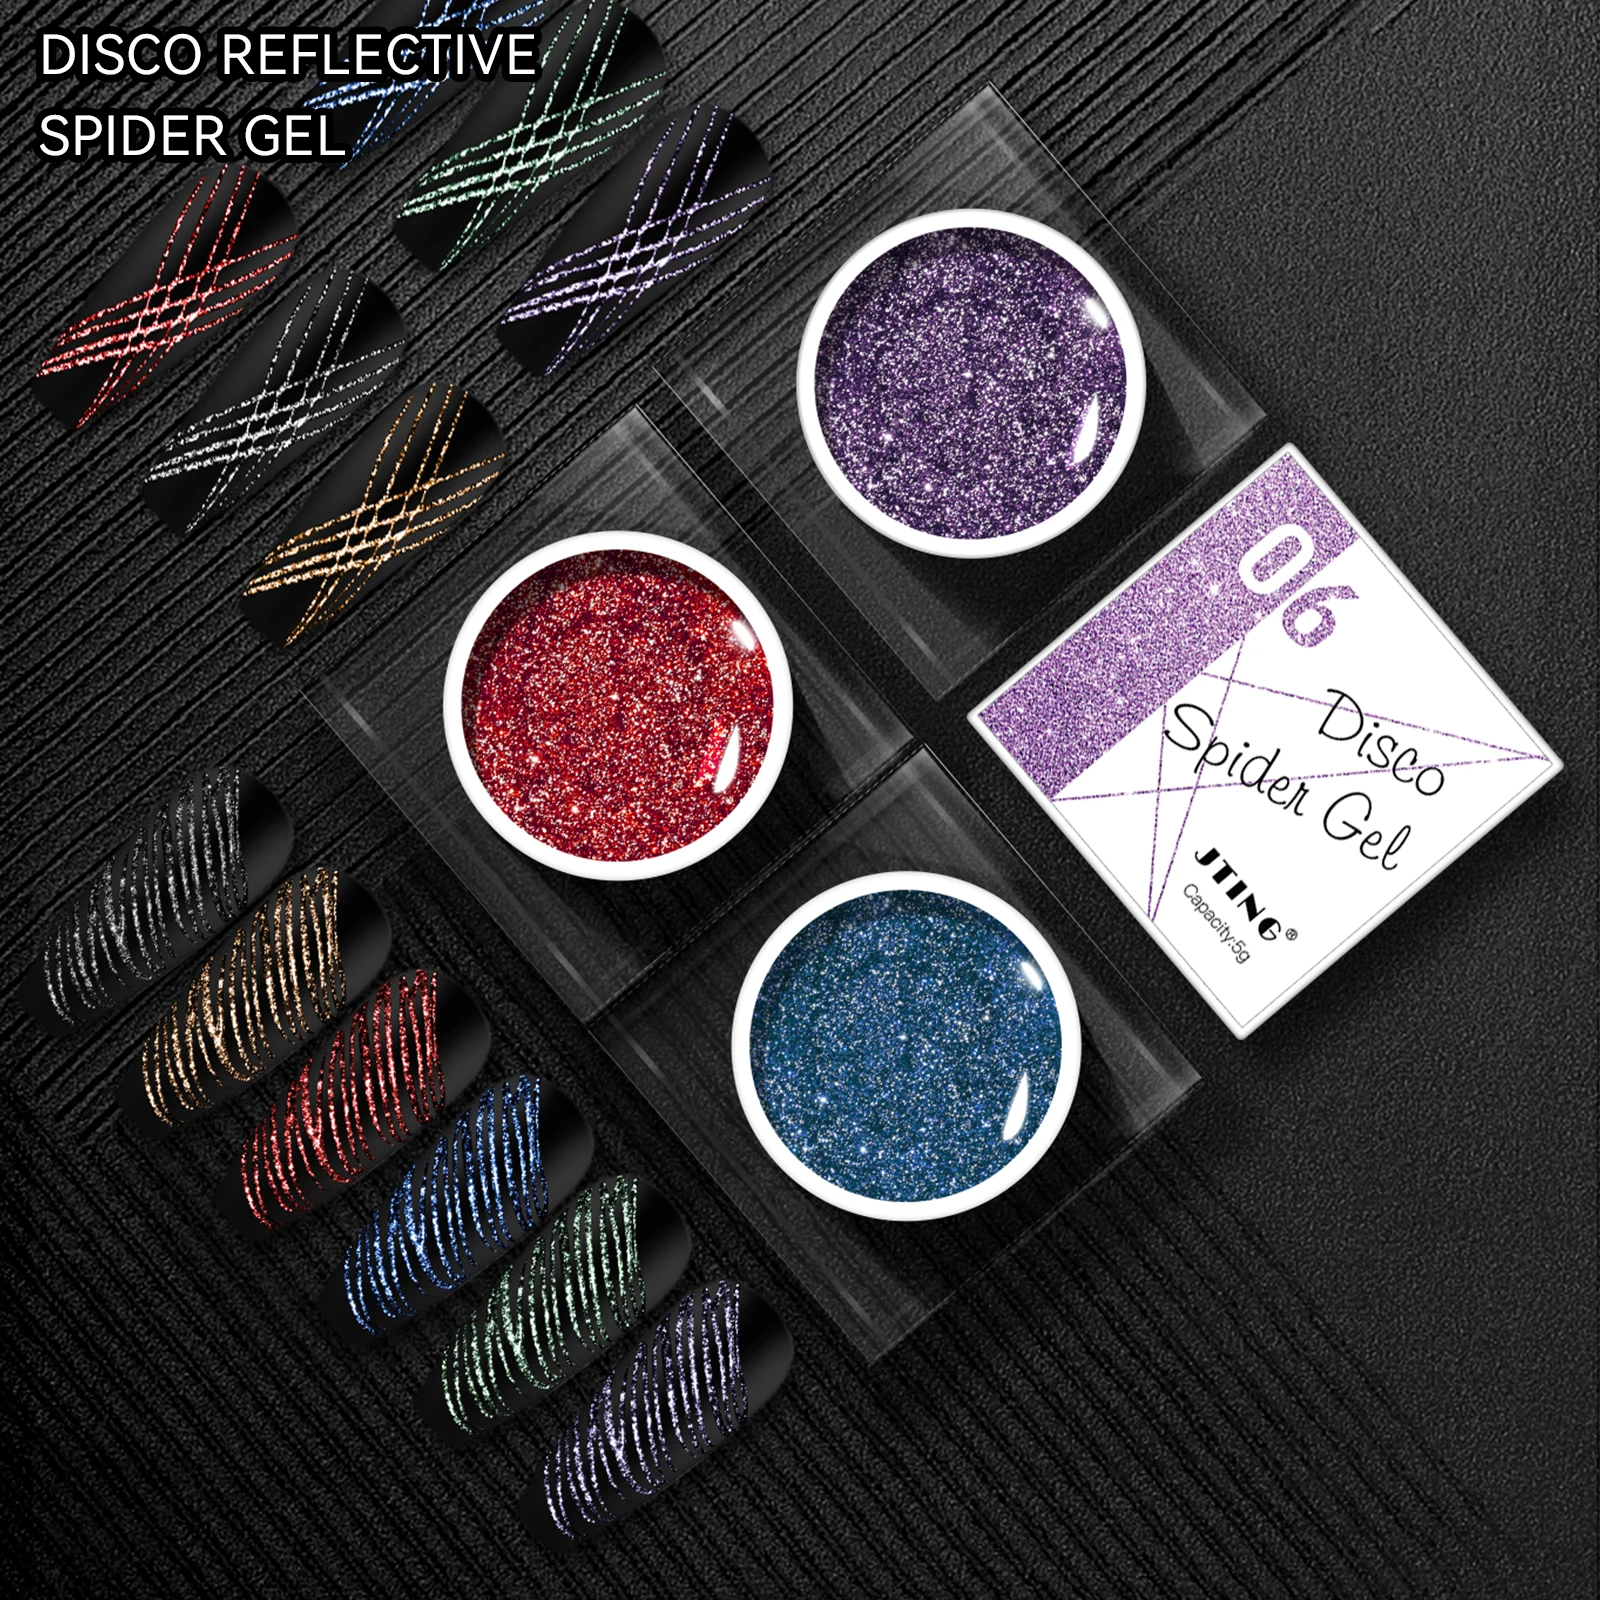 

JTING NEW Design high pigment shiny 6 Colors Disco reflective spider gel nail art 5g jar OEM custom private label